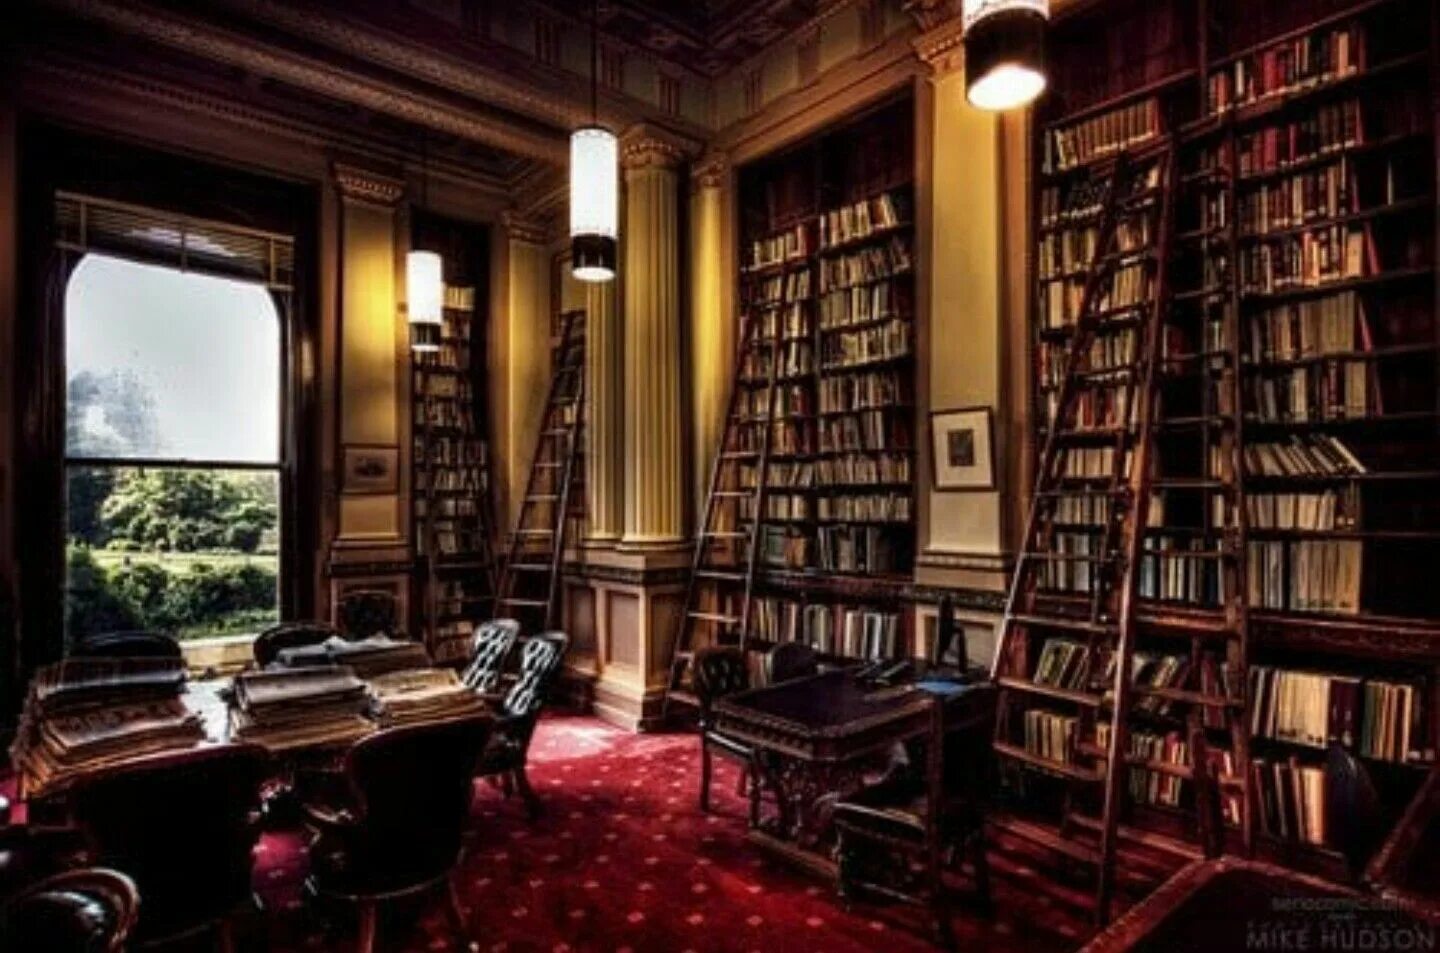 My book library. Старинная библиотека. Библиотека в старинном стиле. Красивая библиотека. Комната библиотека.